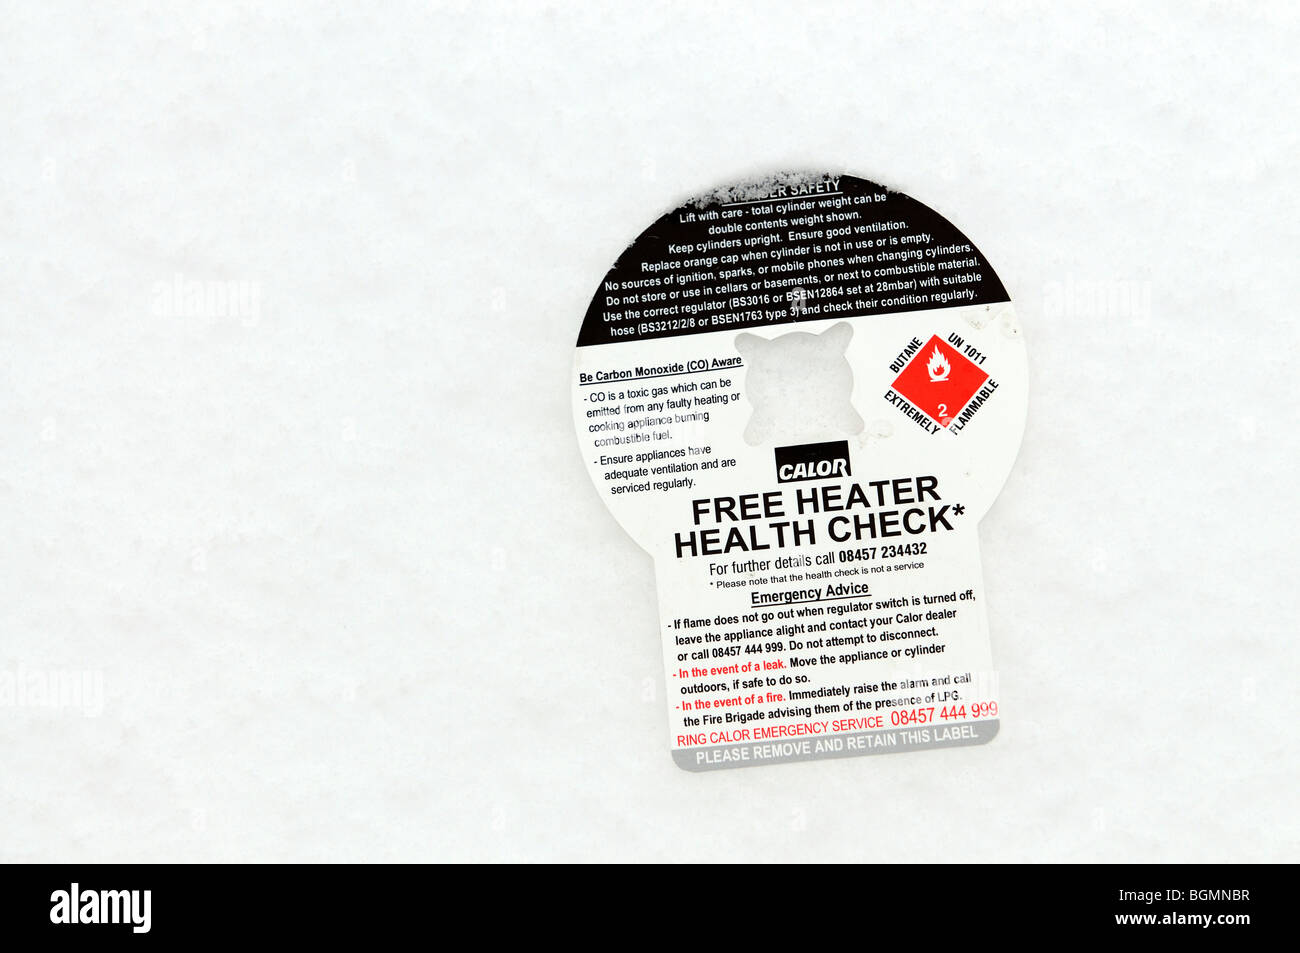 Butane cylinder bottle's free heater health check notice Stock Photo